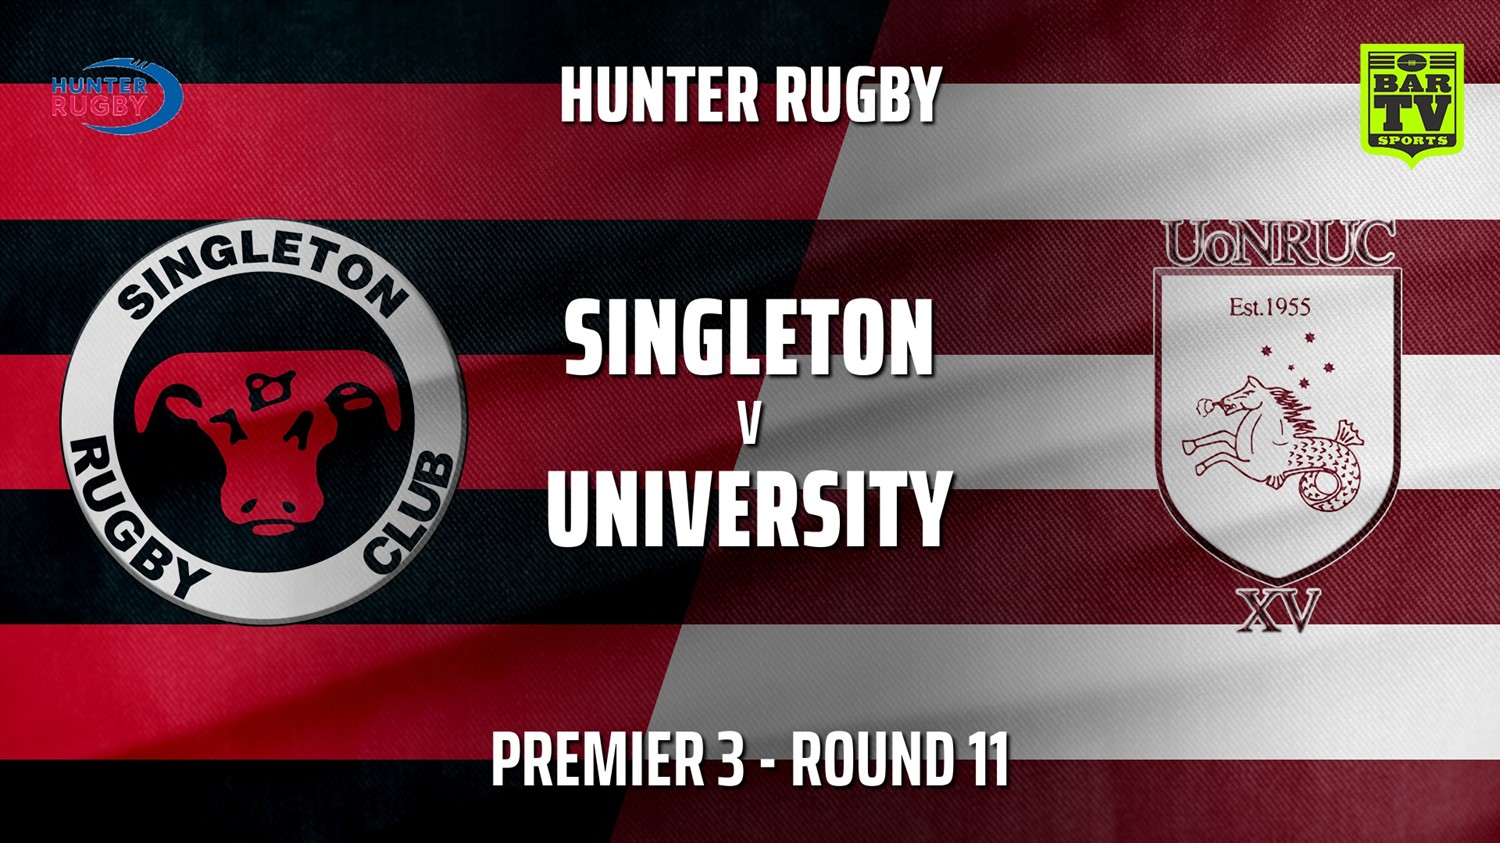 210703-Hunter Rugby Round 11 - Premier 3 - Singleton Bulls v University Of Newcastle Slate Image